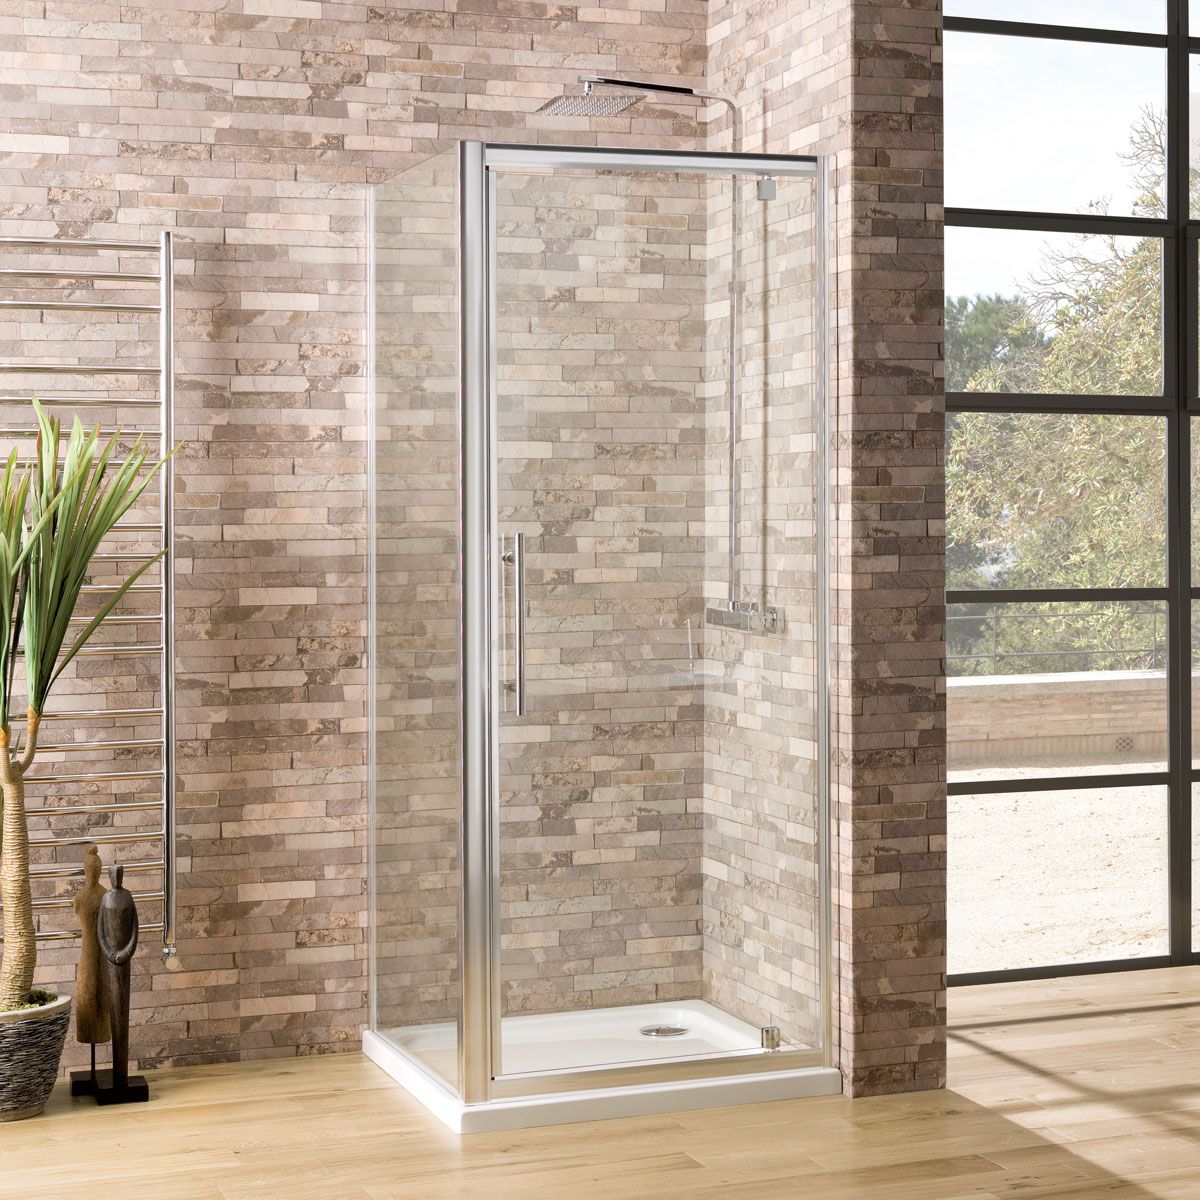 900 x 760mm Quadrant Shower Enclosure Pivot Hinge 6mm Glass Shower